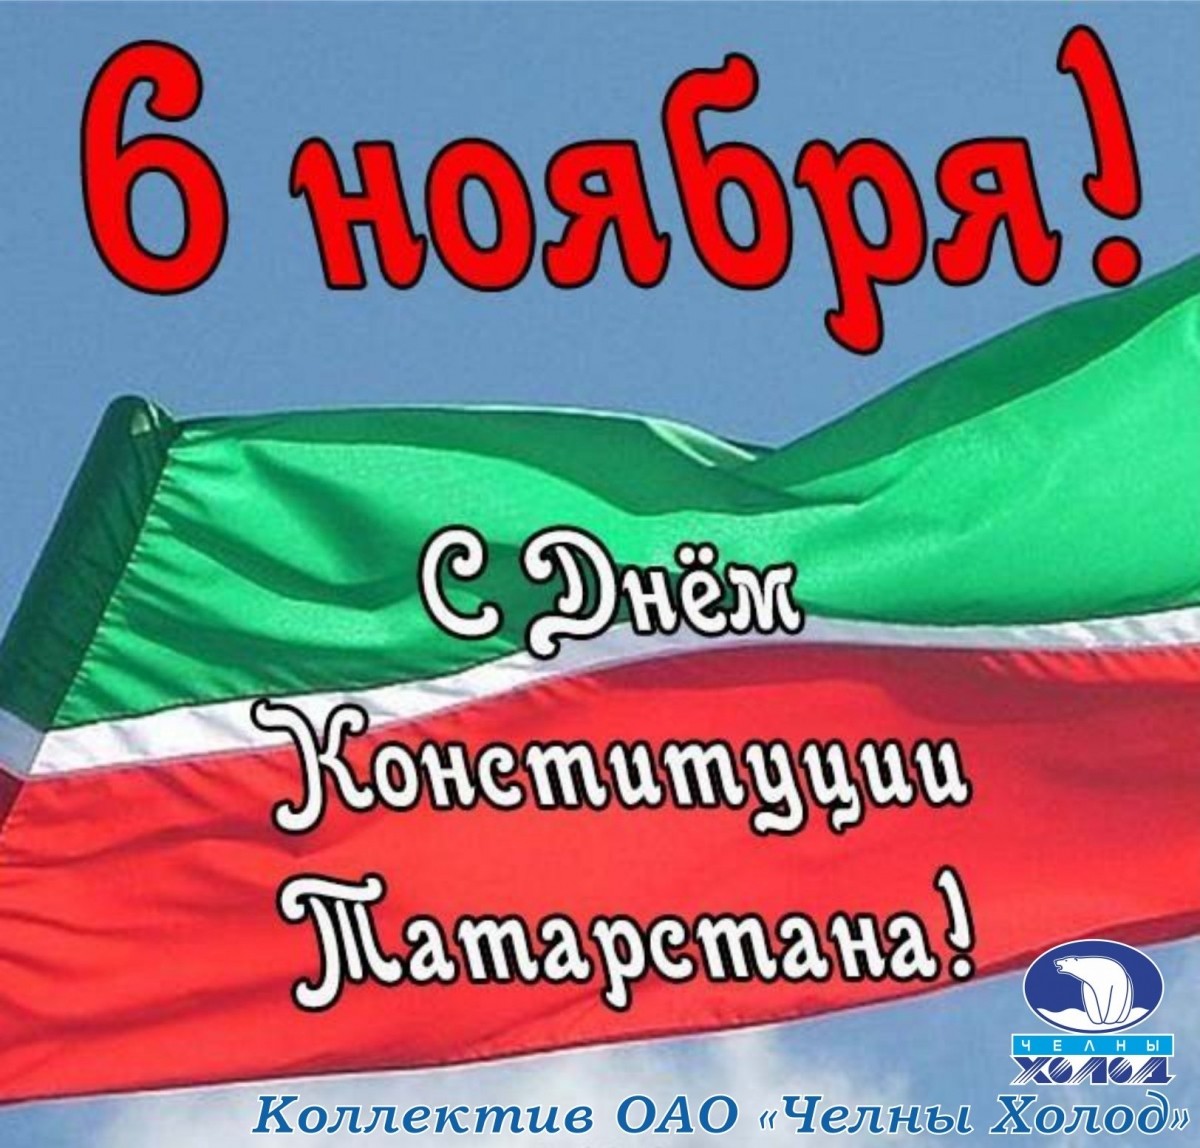 День Конституции Республики Татарстан!